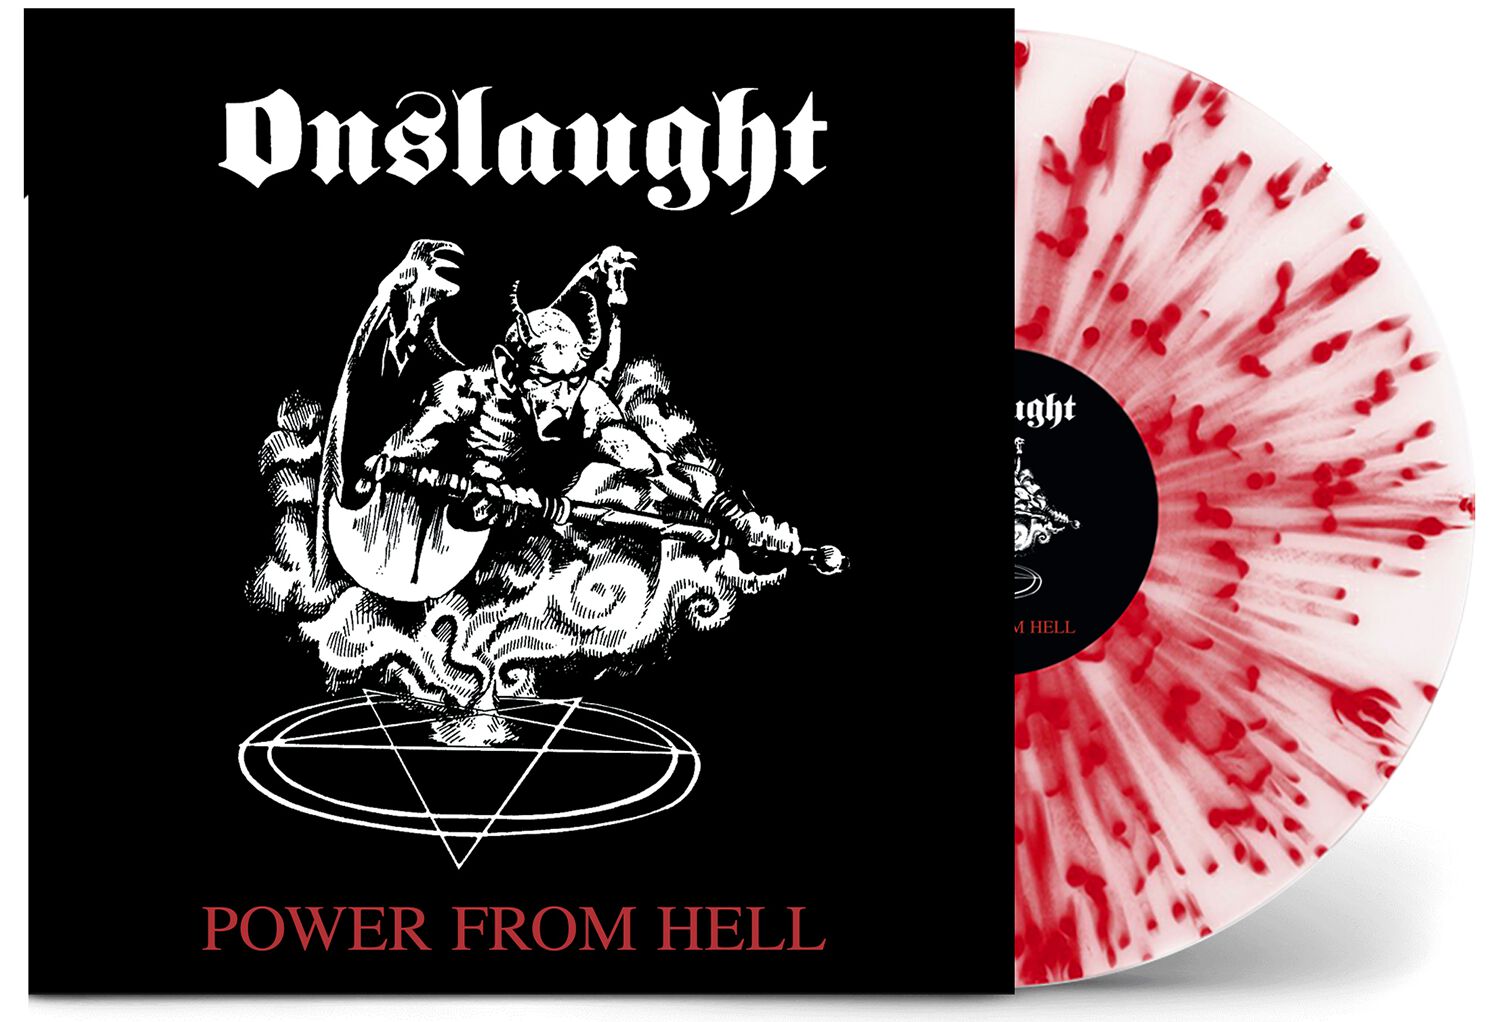 Onslaught Power from hell LP splattered